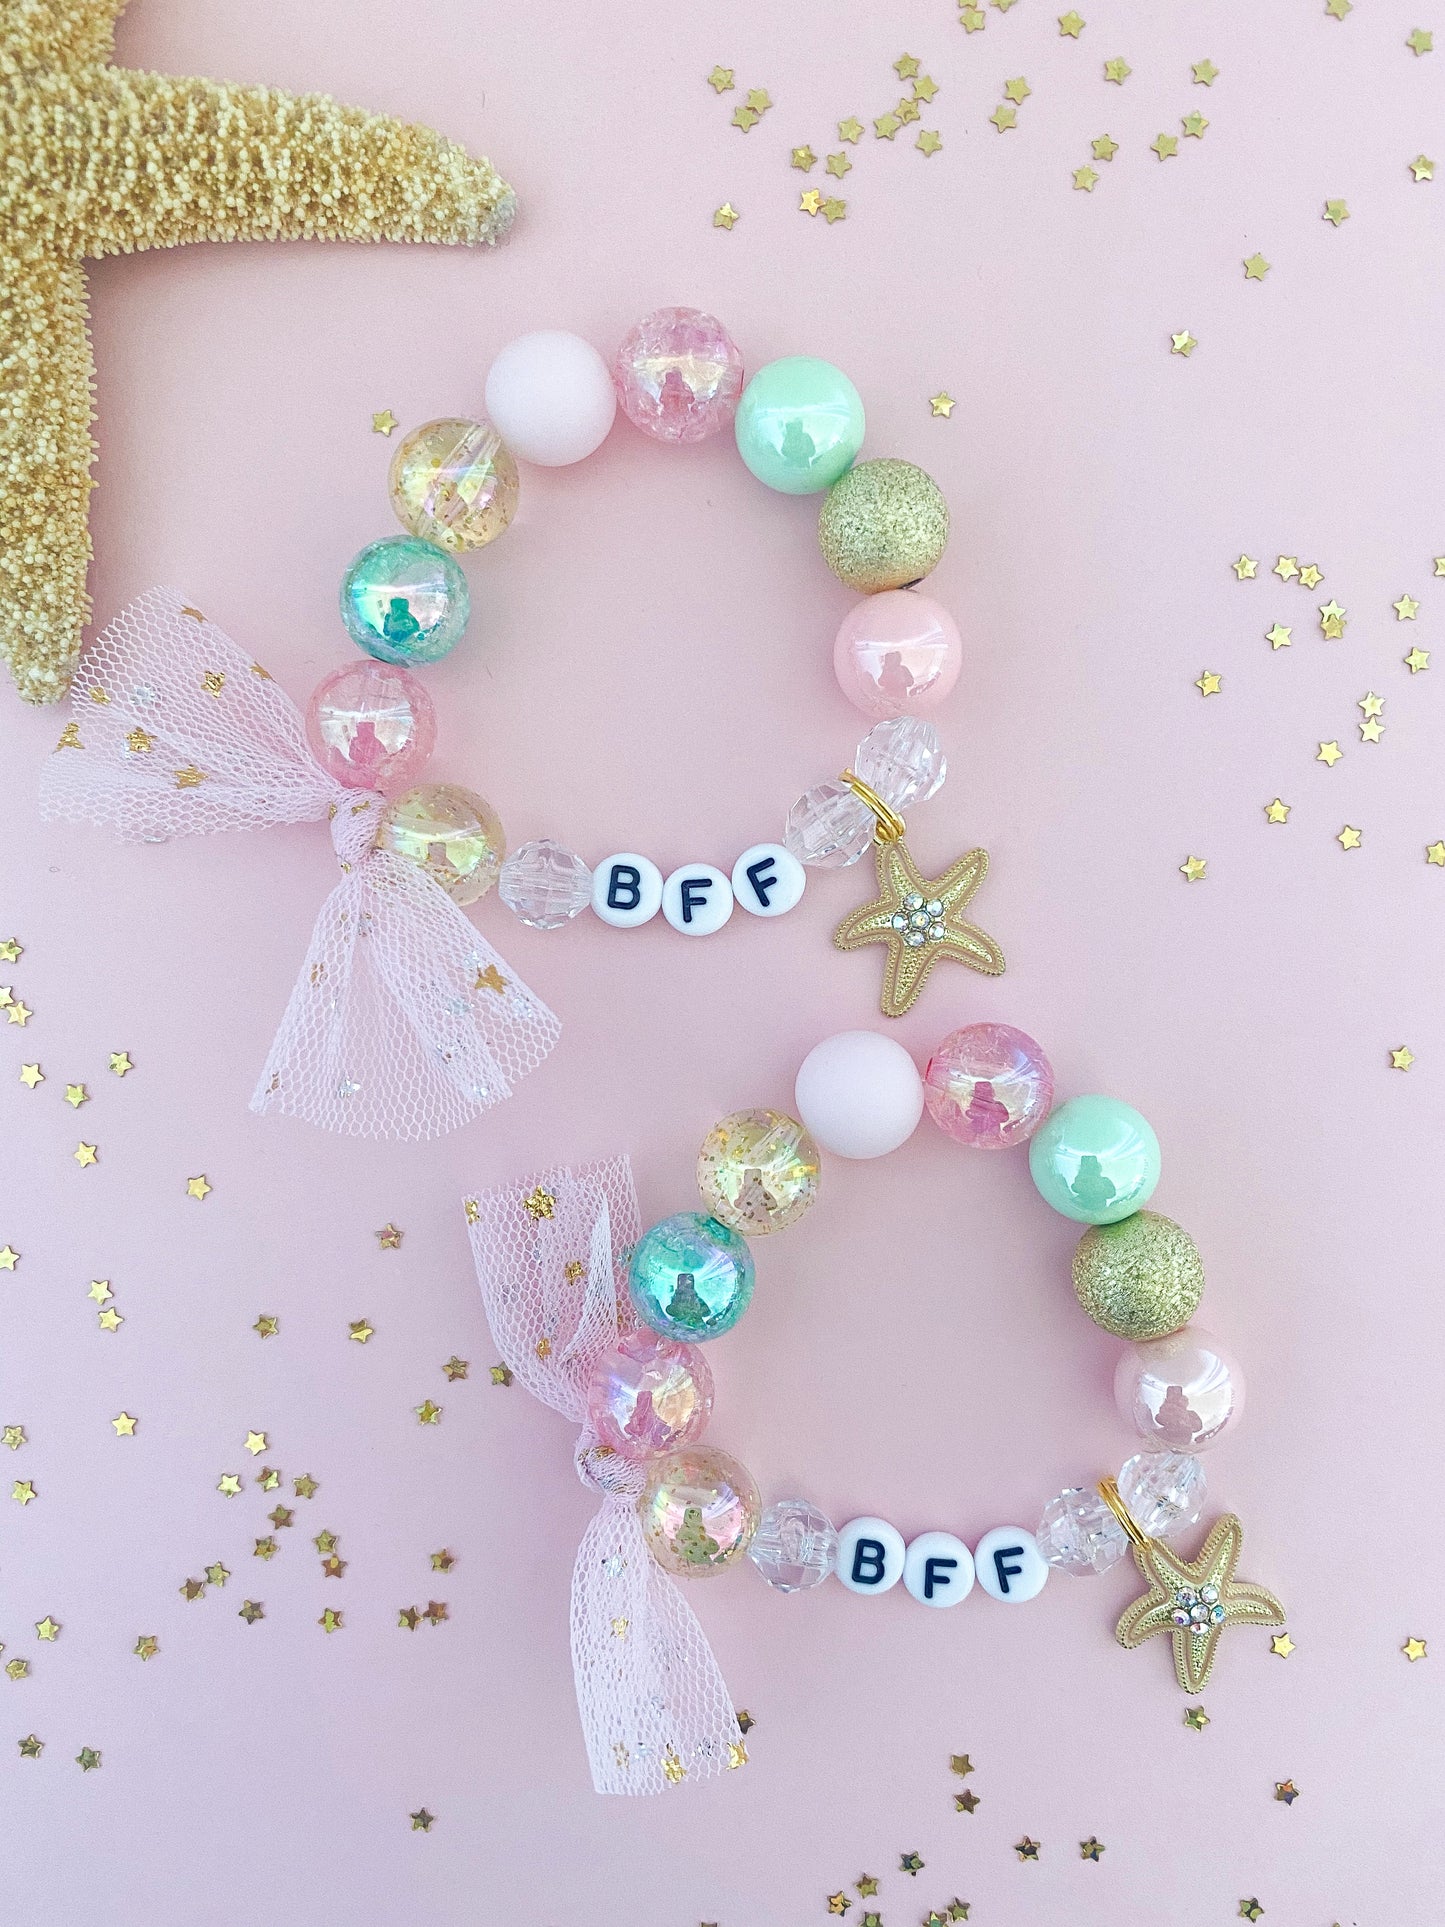 BFF Bracelets with Starfish Charm - Set of 2